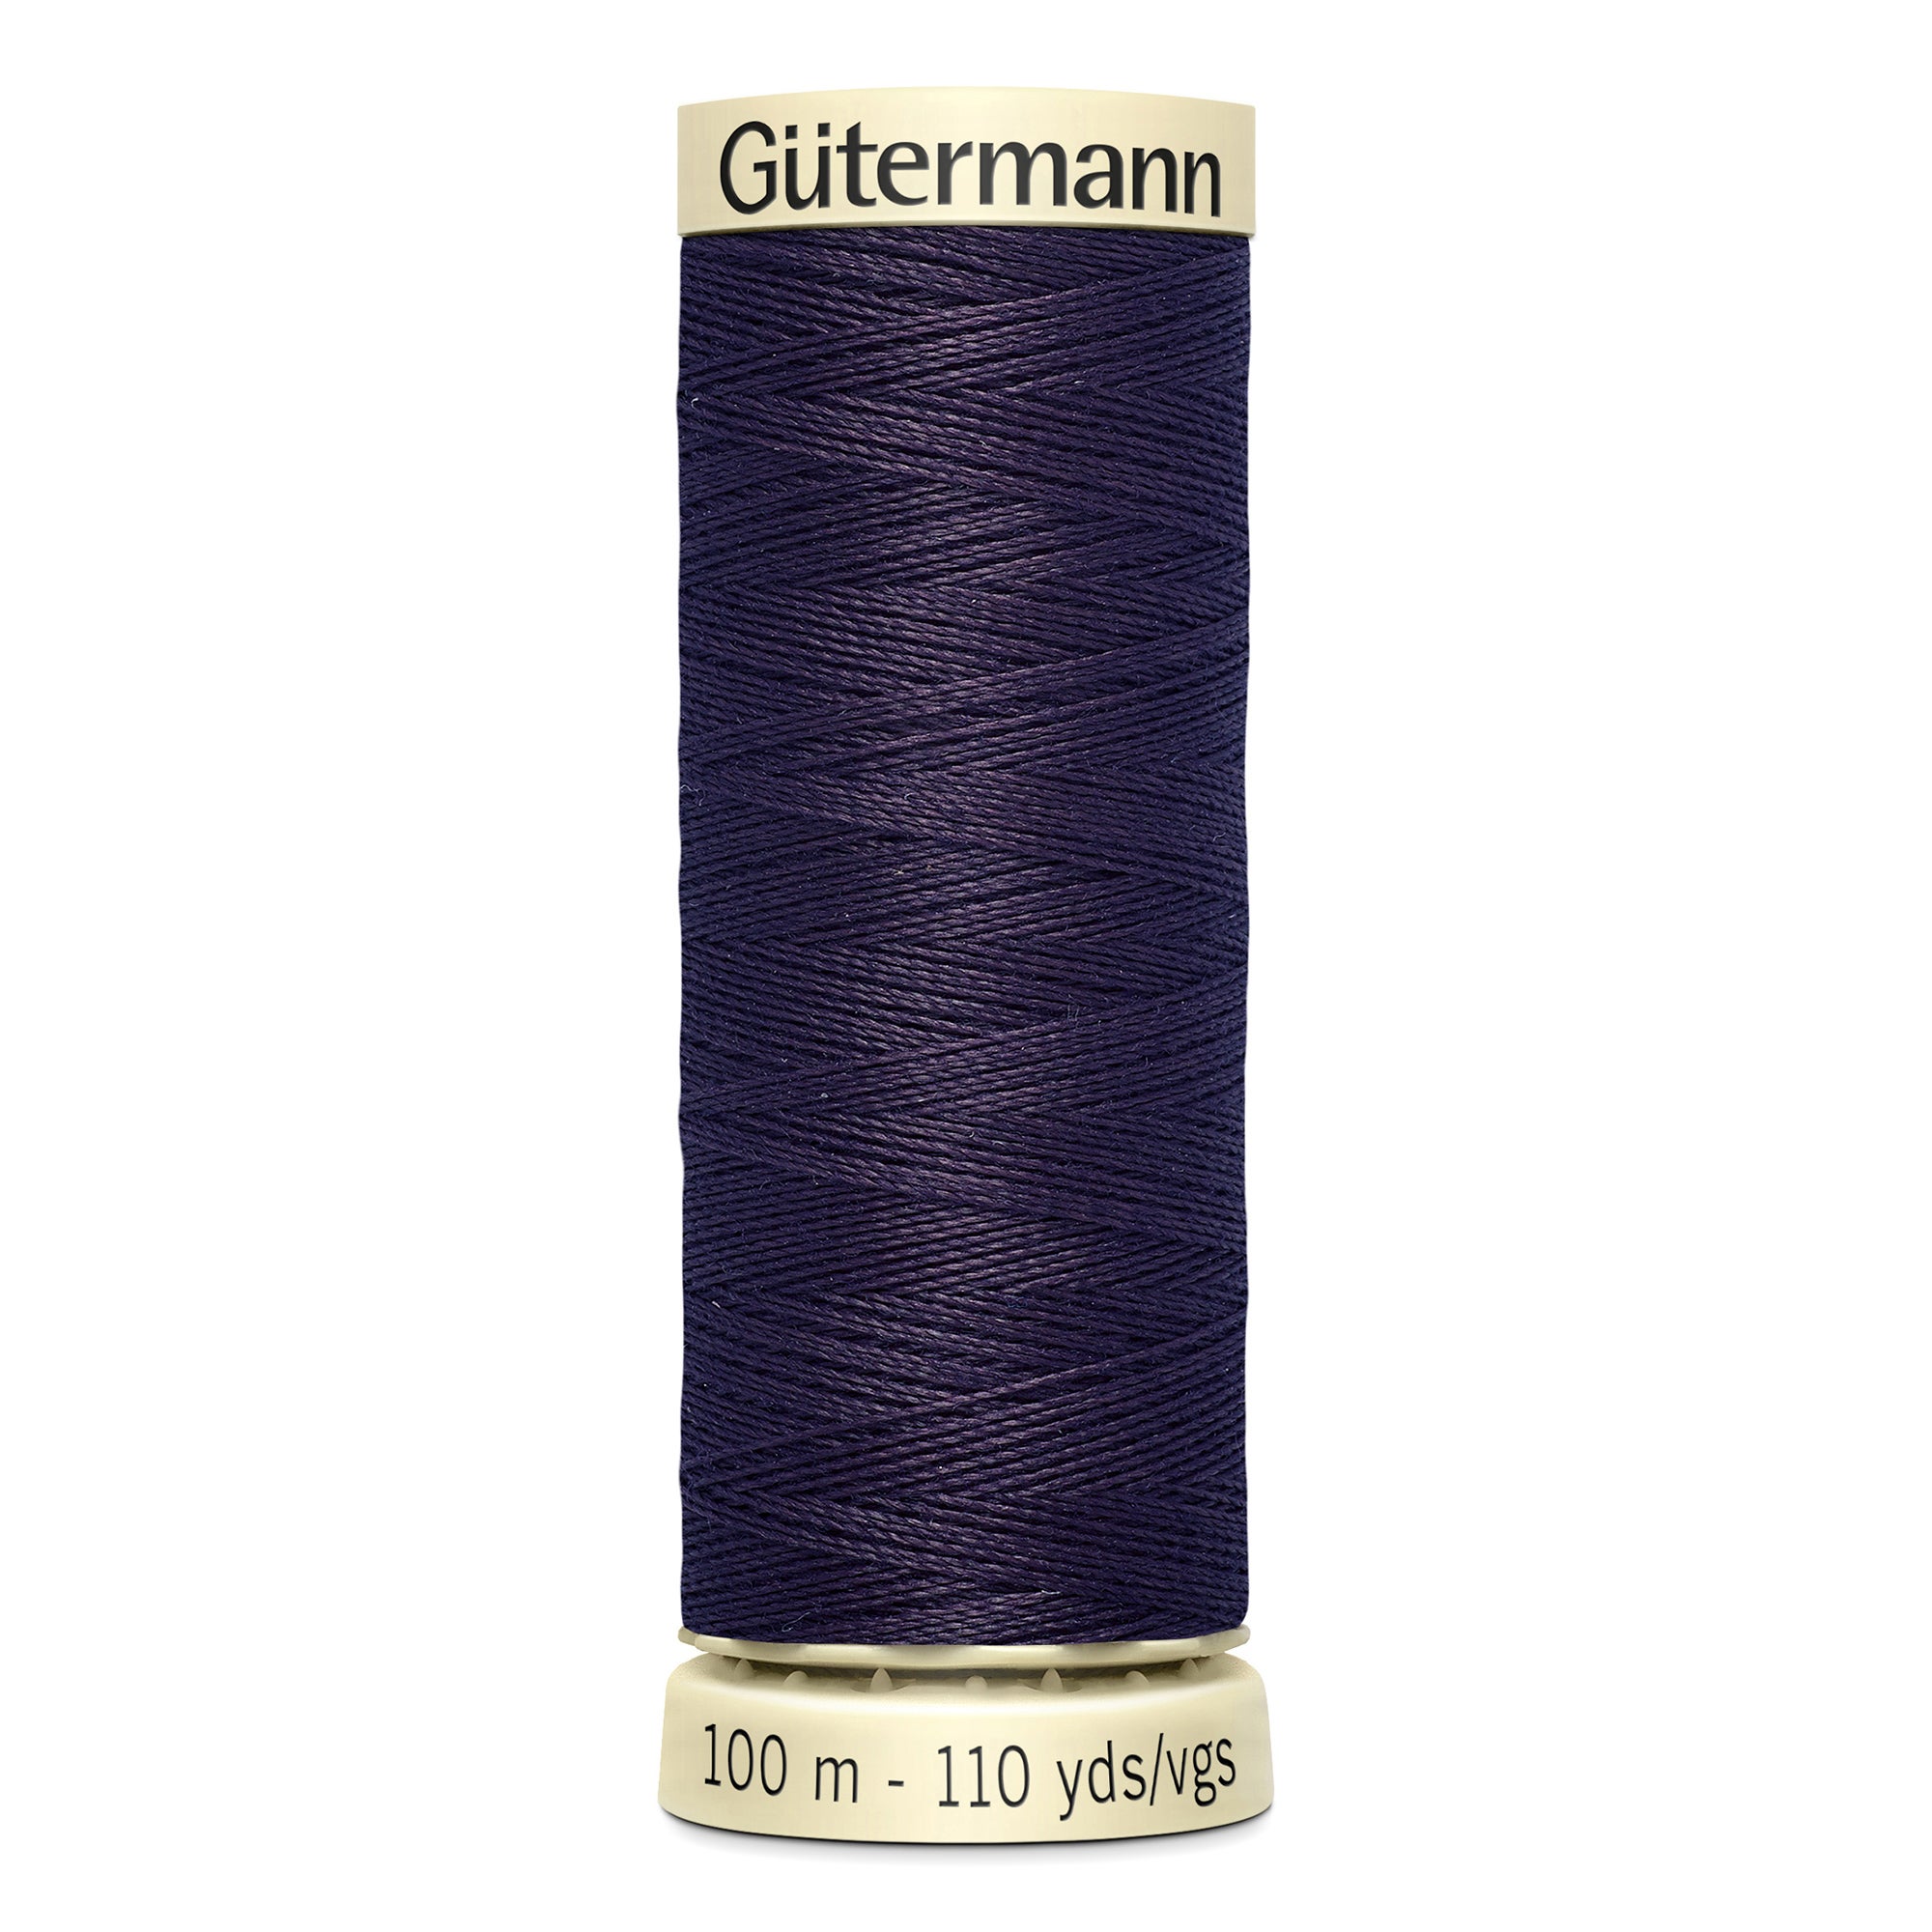 Gutermann Sew All Thread 100m Plum (512)